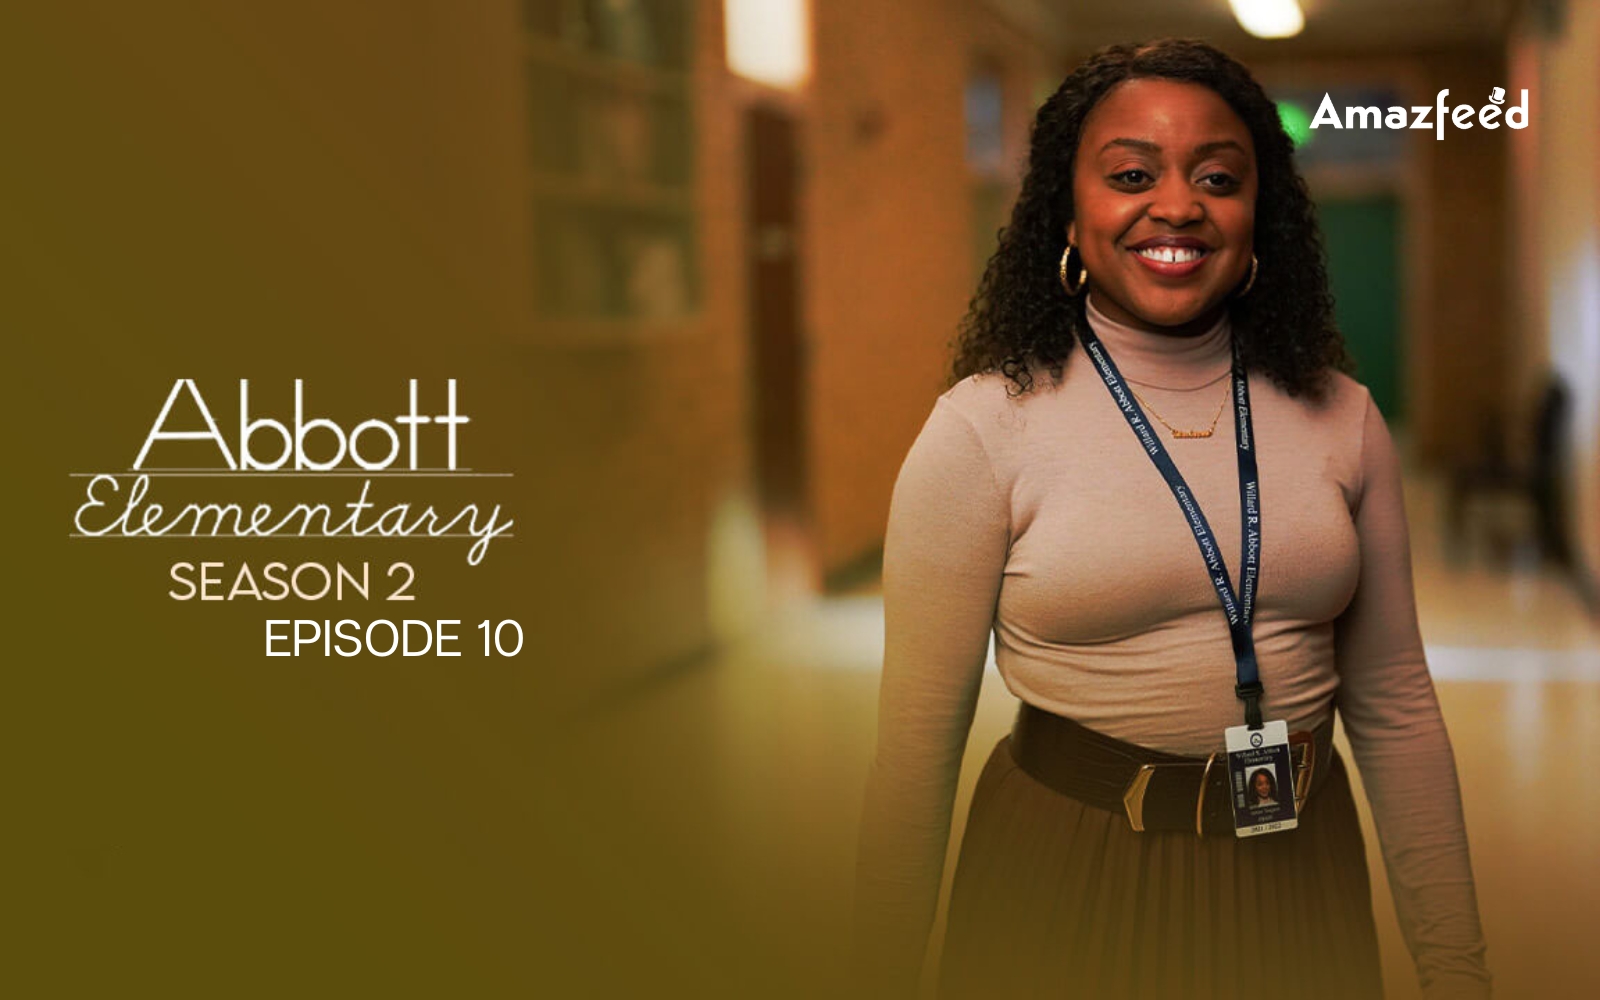 Abbott Elementary Season 2 Episode 10